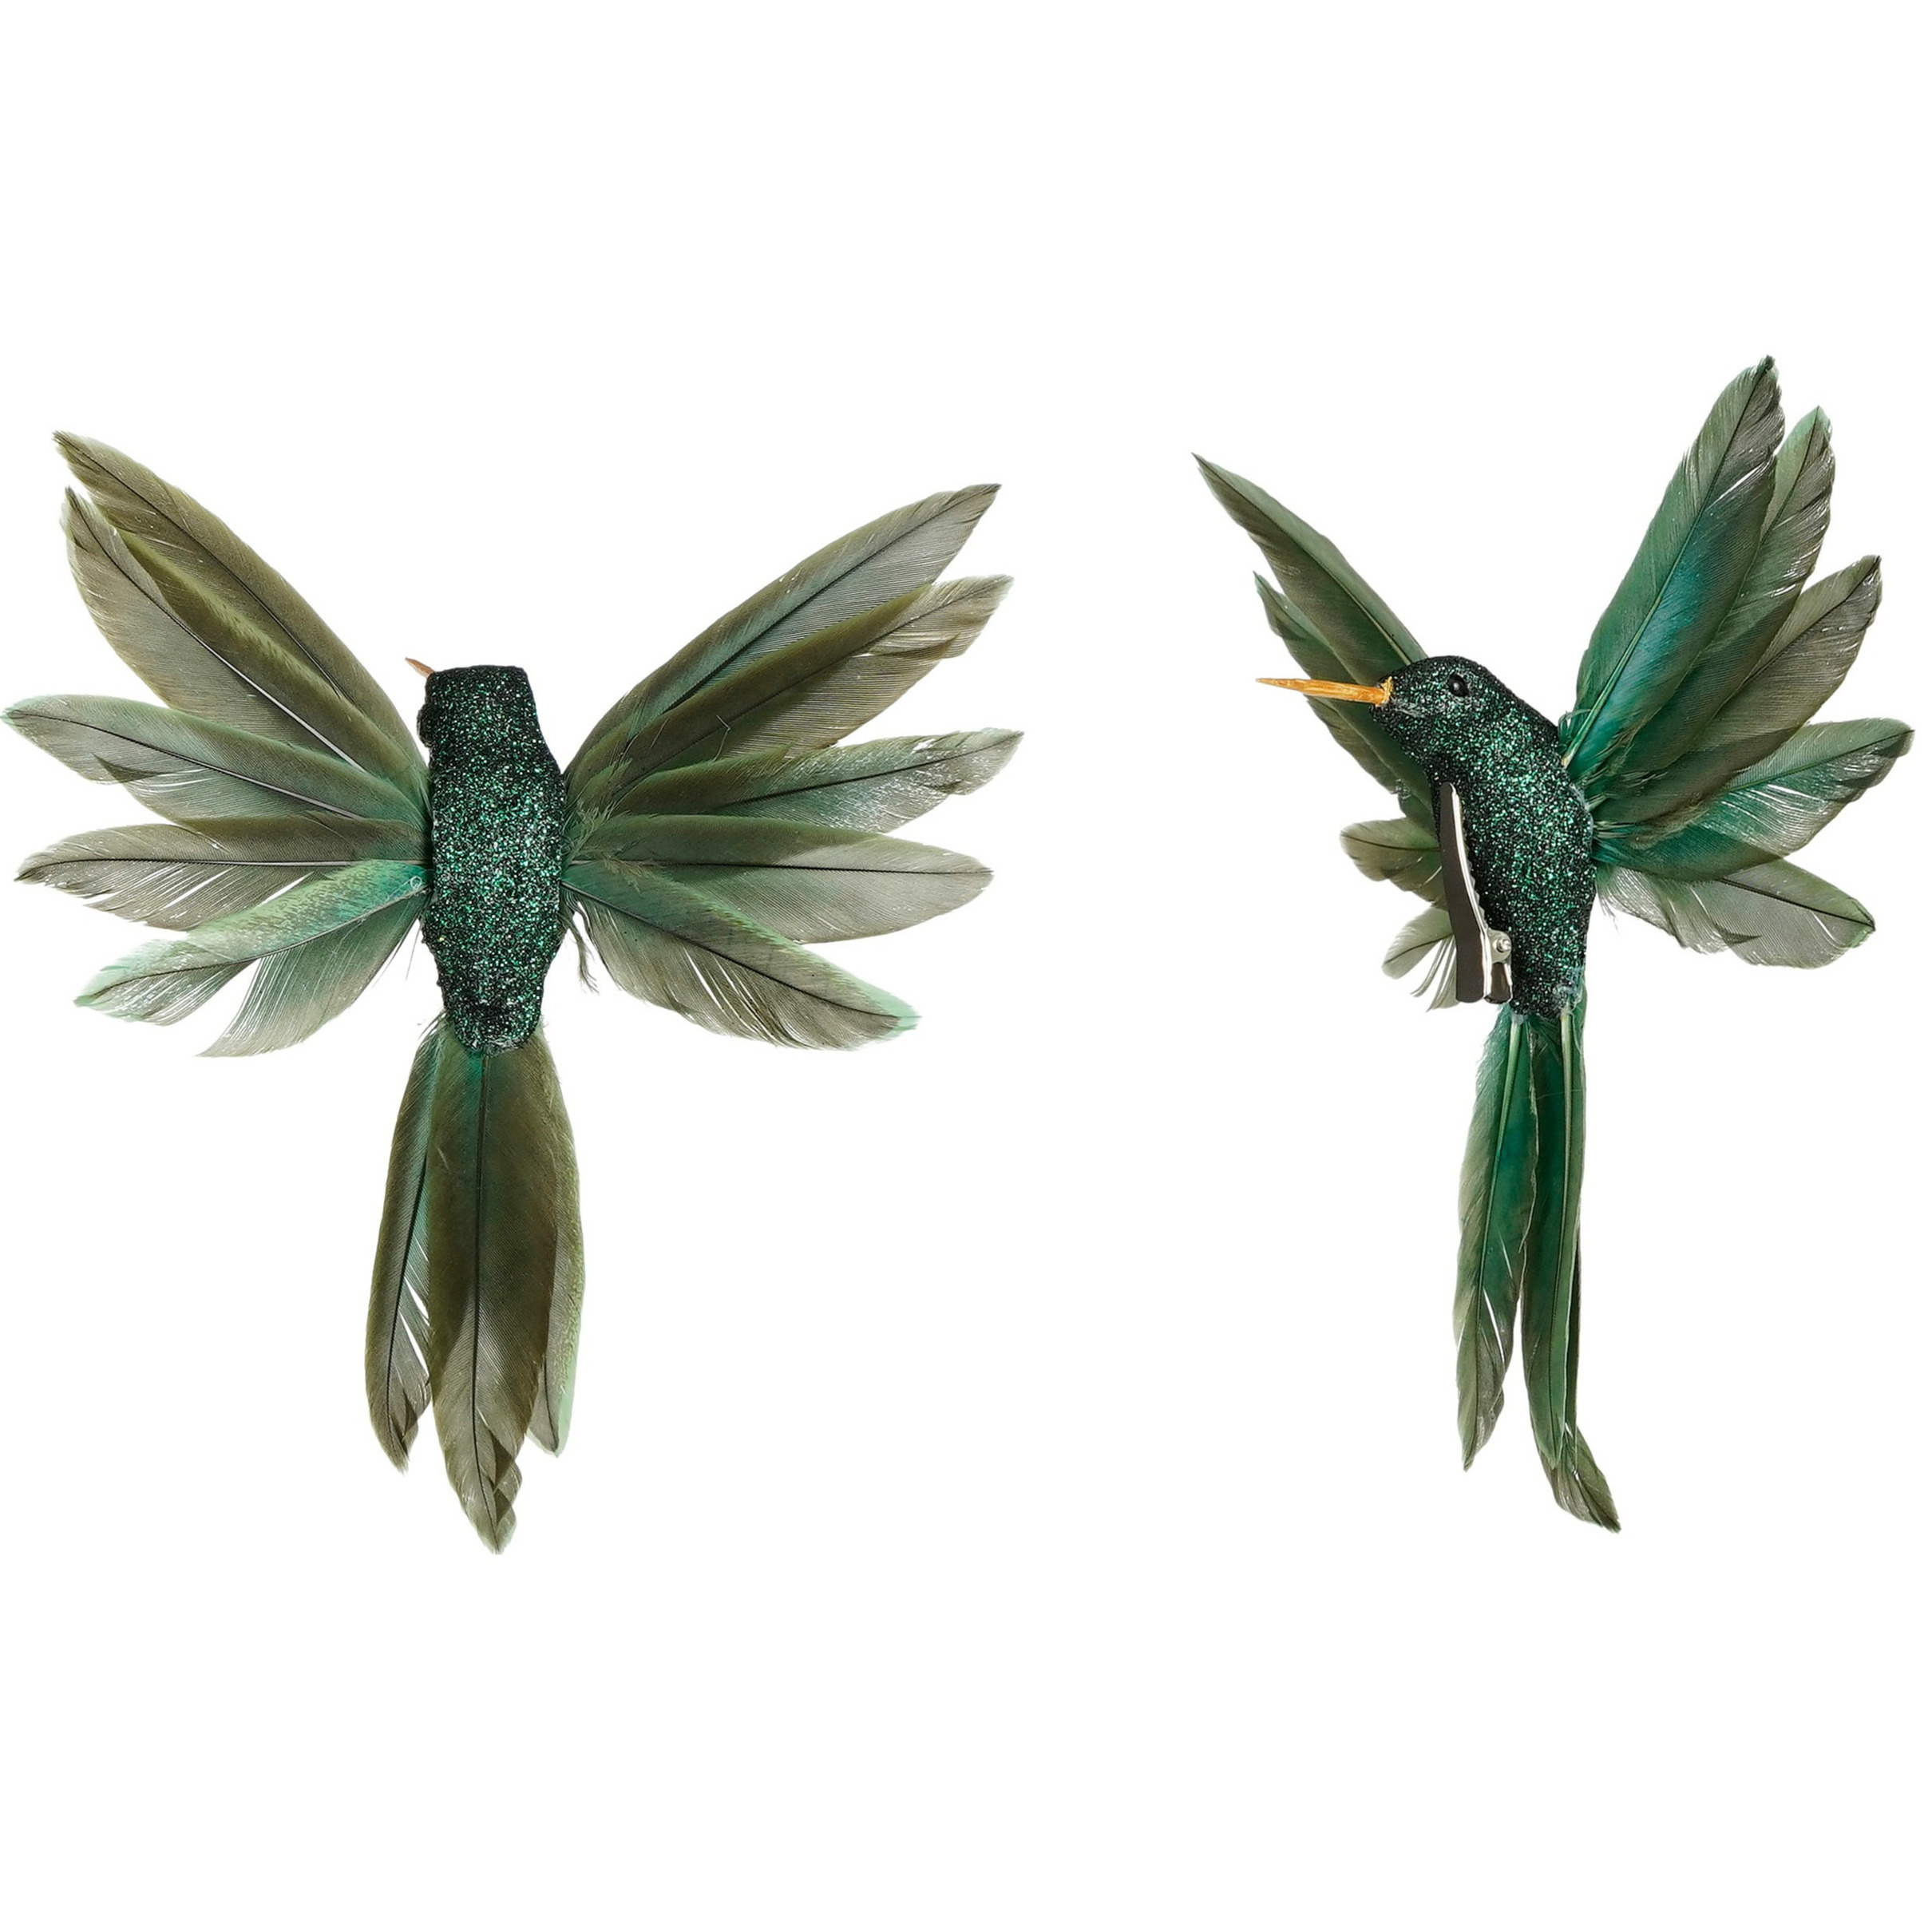 House of Seasons kolibries - decoratie vogels op clip - groen - 14,5cm